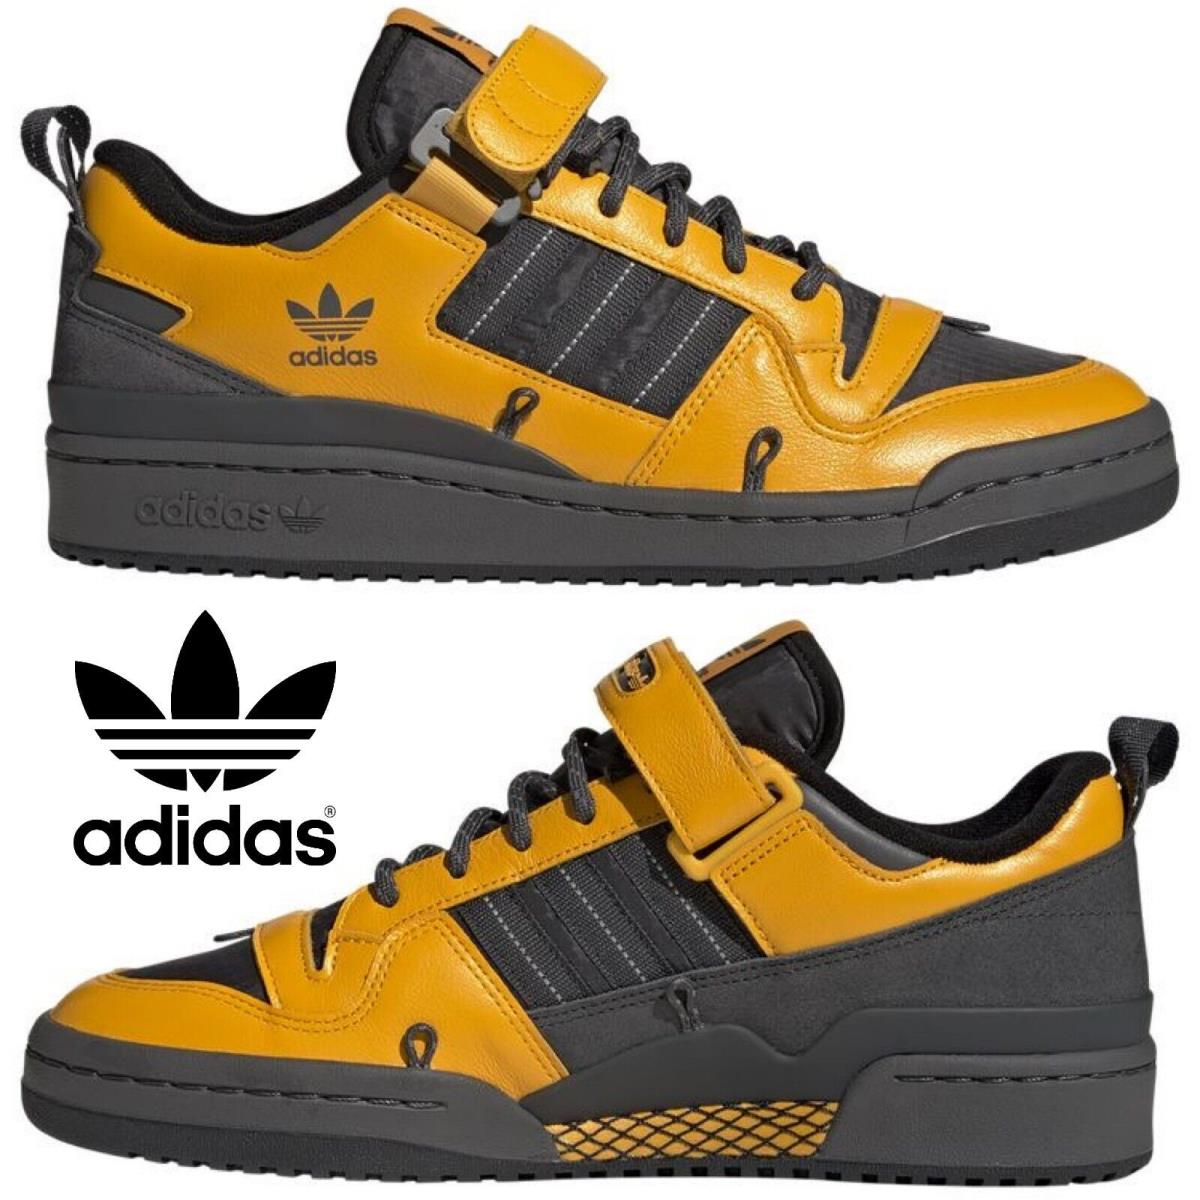 Adidas Originals Forum 84 Low Men`s Sneakers Comfort Sport Casual Shoes Black